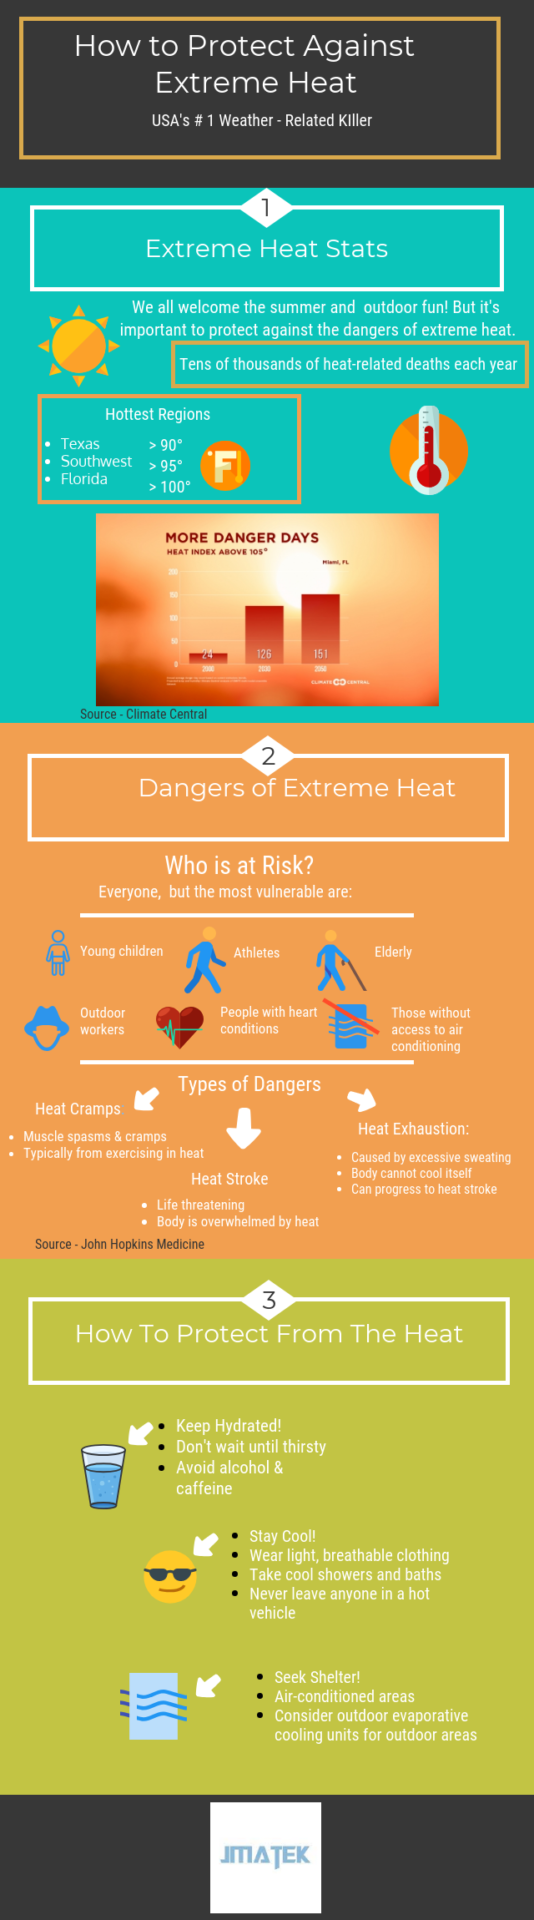 Heat Stress Prevention Tips